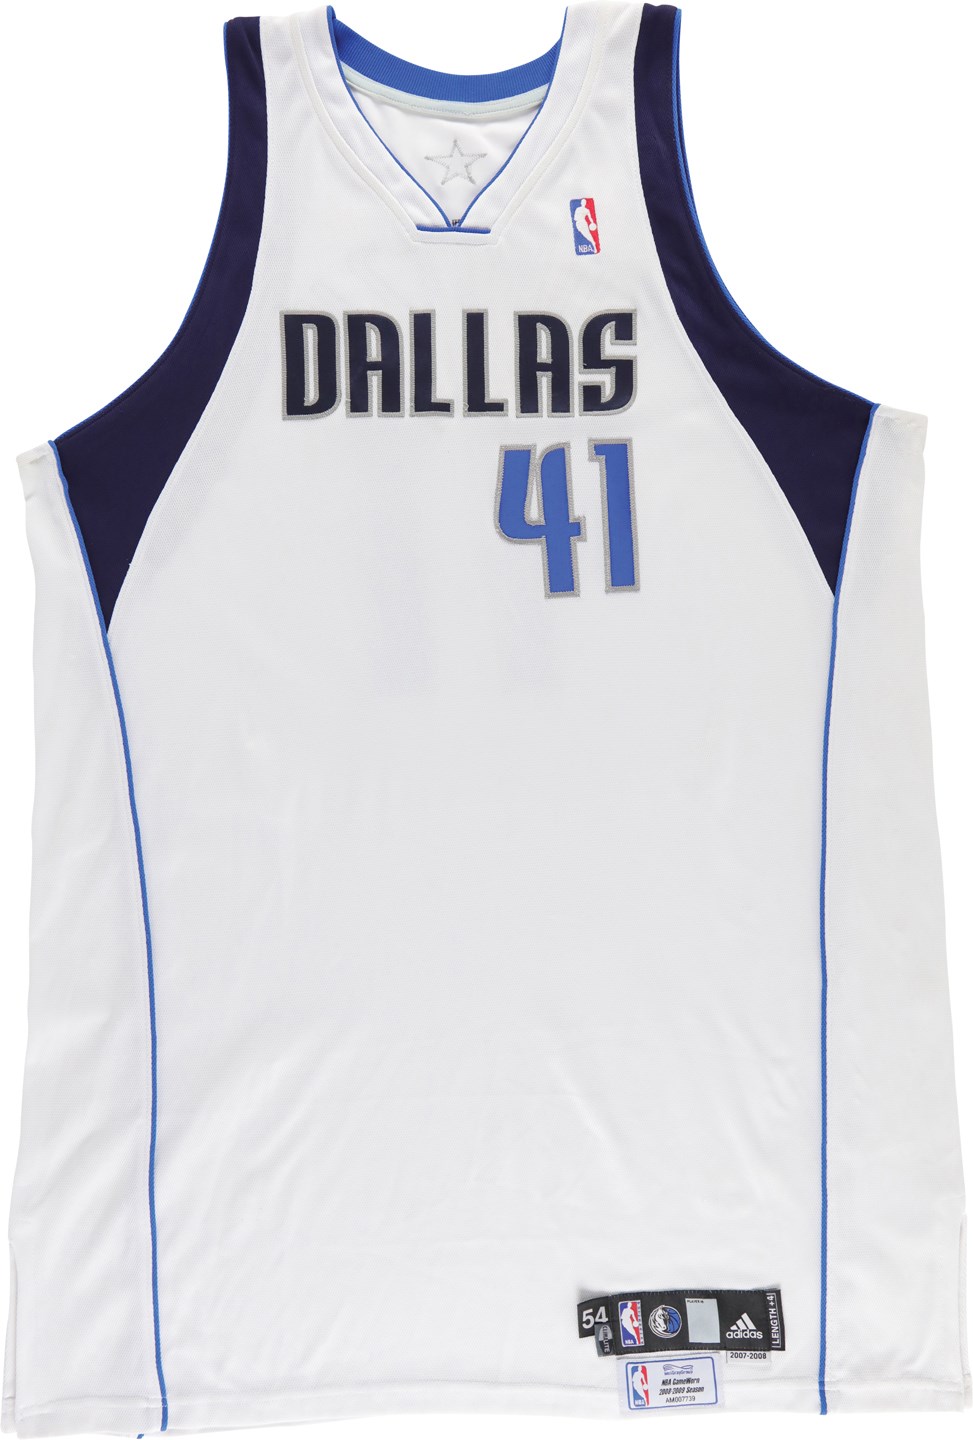 - 3/1/09 Dirk Nowitzki "Double-Double" Dallas Mavericks Game Worn Jersey (MeiGray, Team LOA & Photo-Matched)